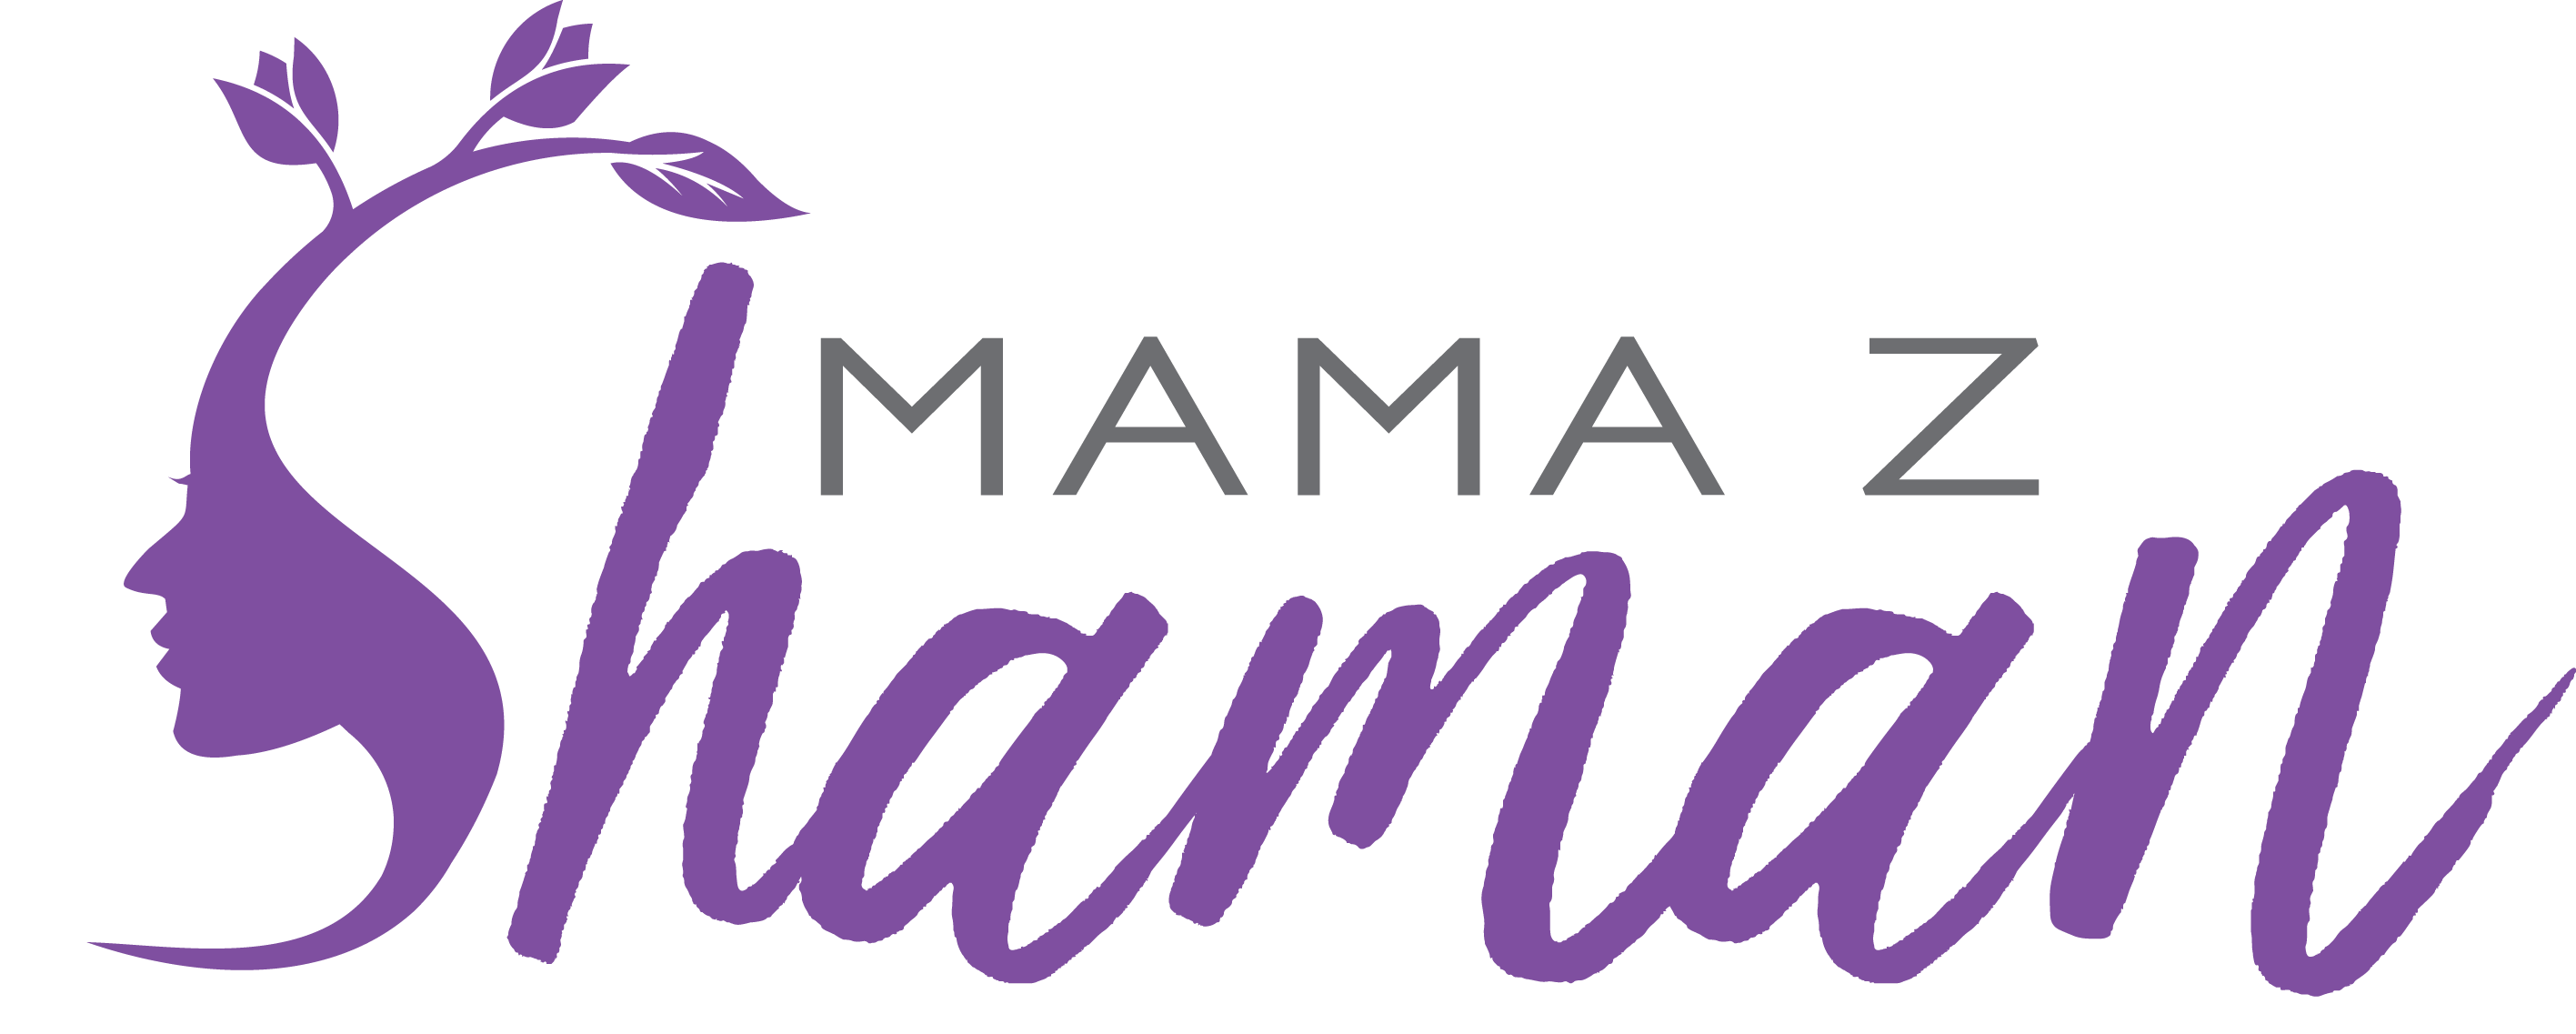 Mama Z Shaman